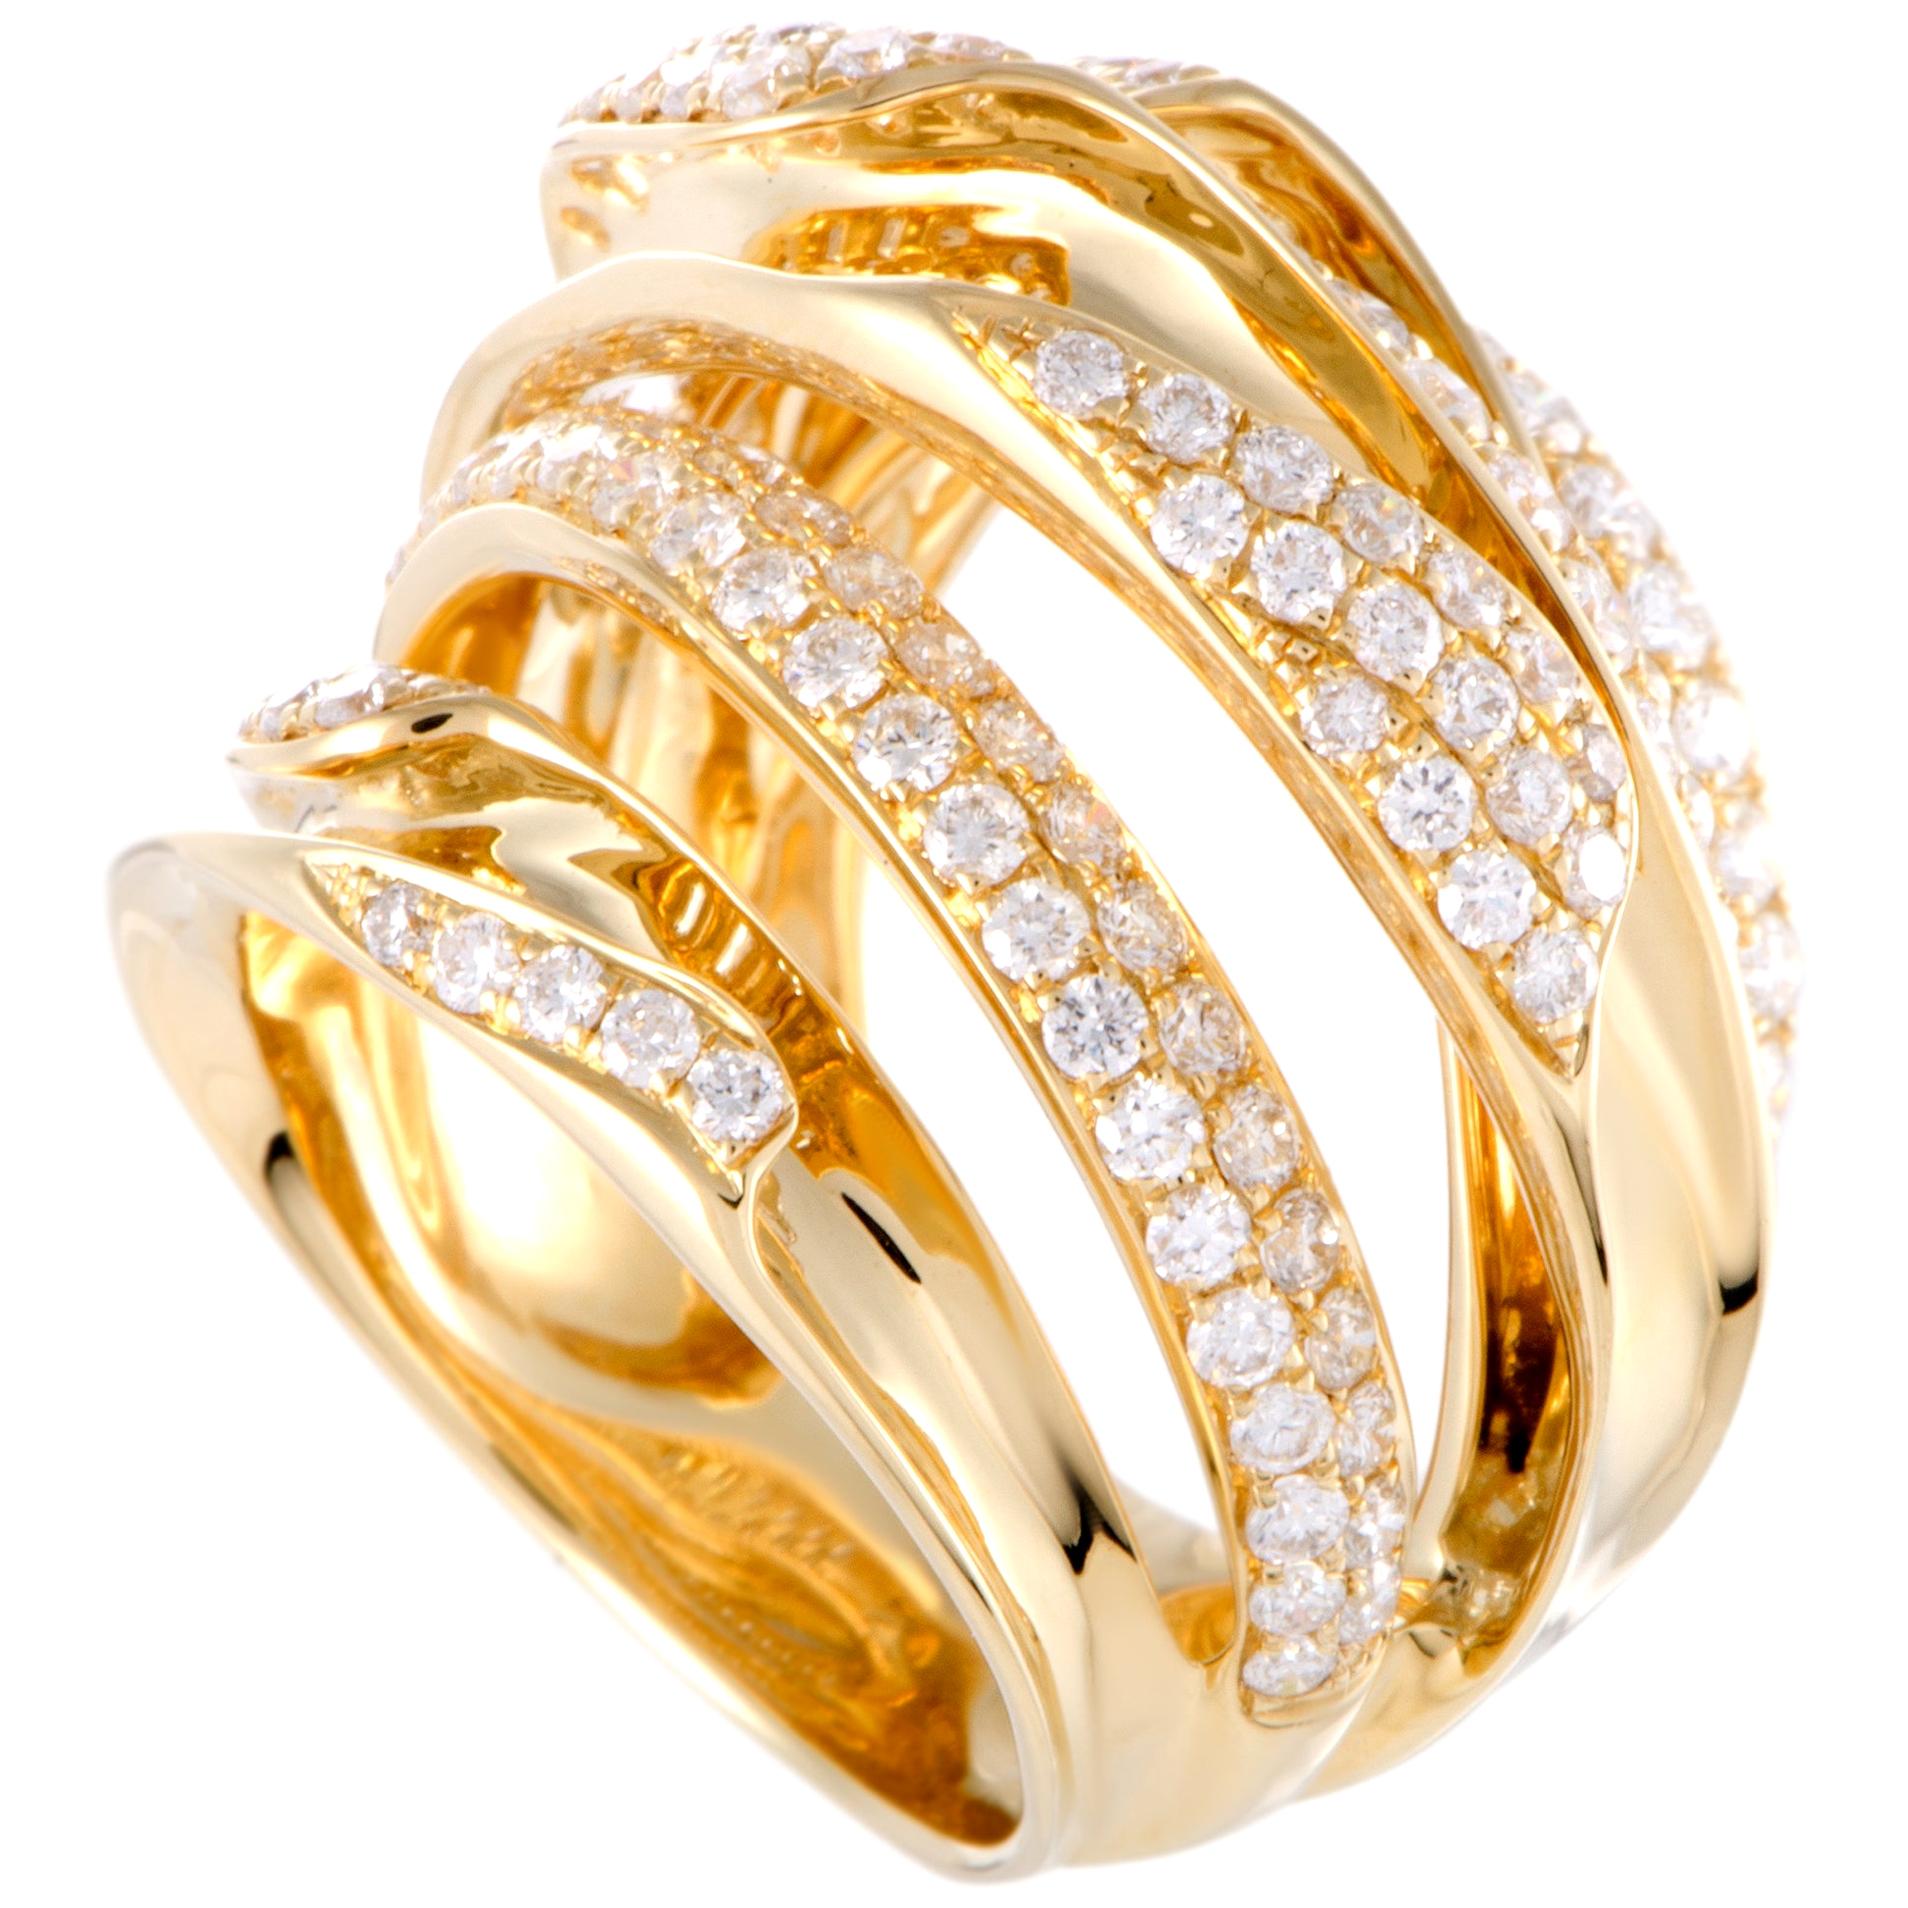 LB Exclusive 18 Karat Yellow Gold Diamond Pave Multi Band Ring